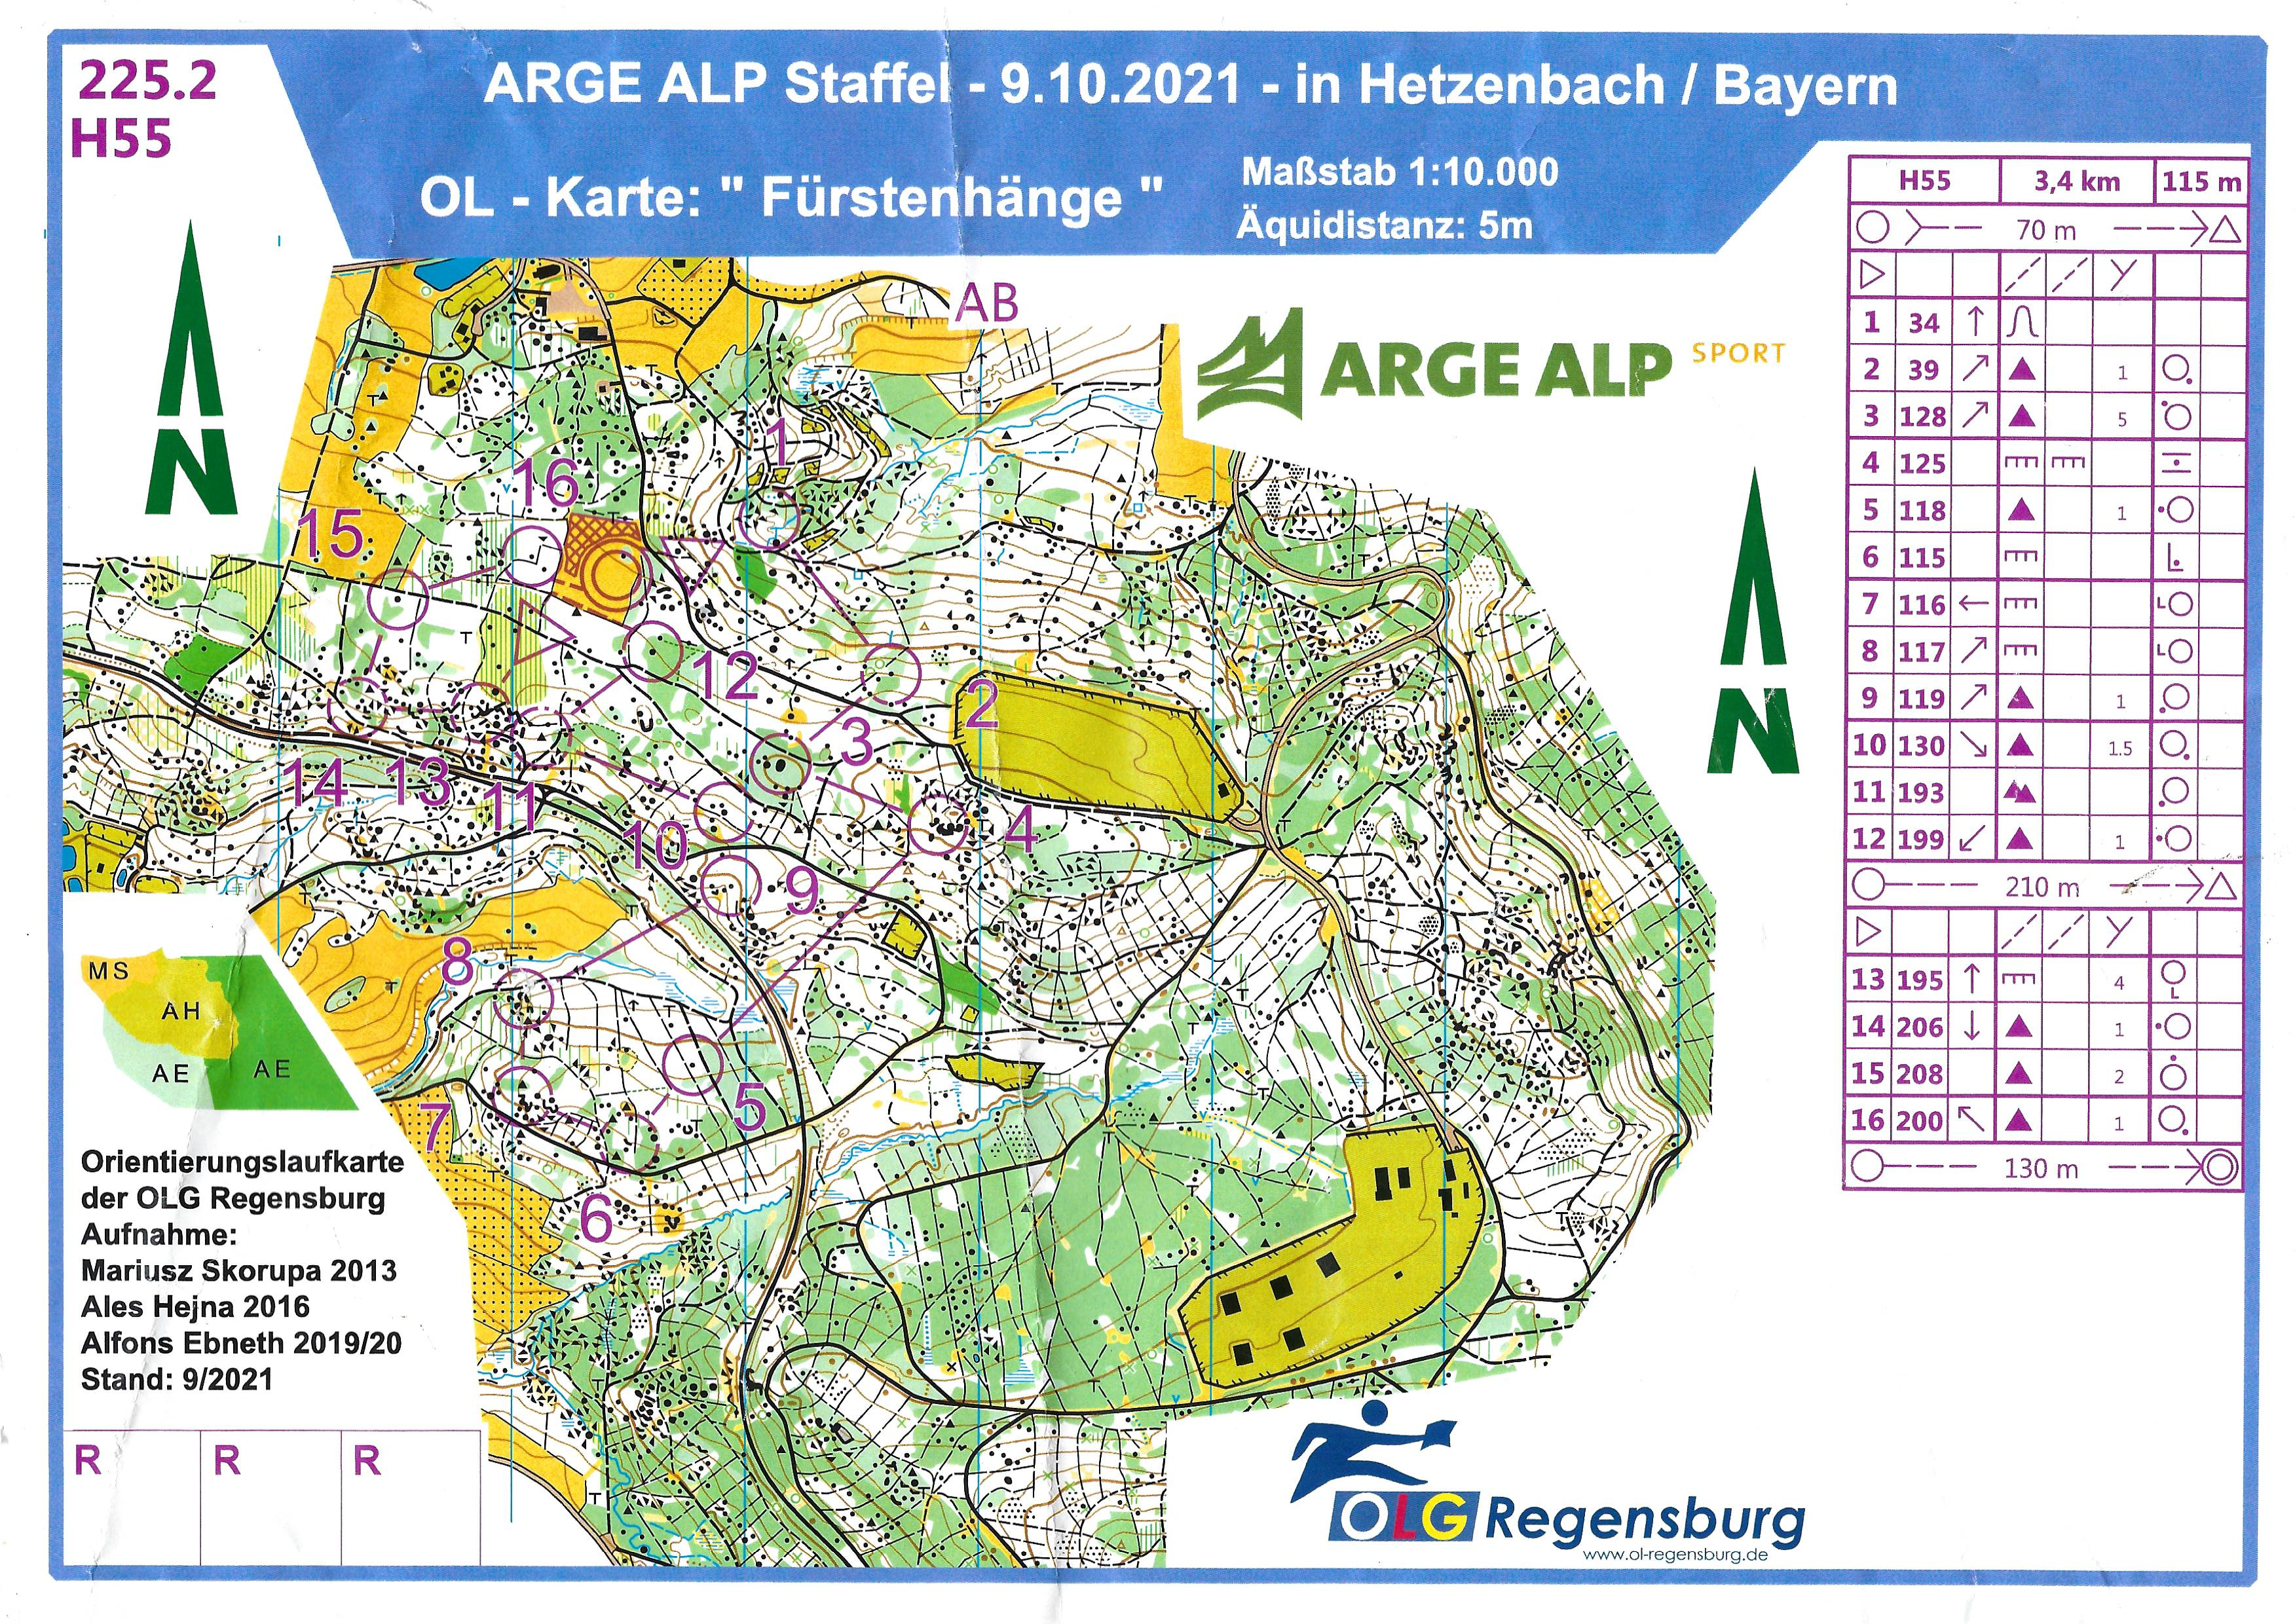 Arge Alp 2021 Regensburg Staffel (2021-10-09)